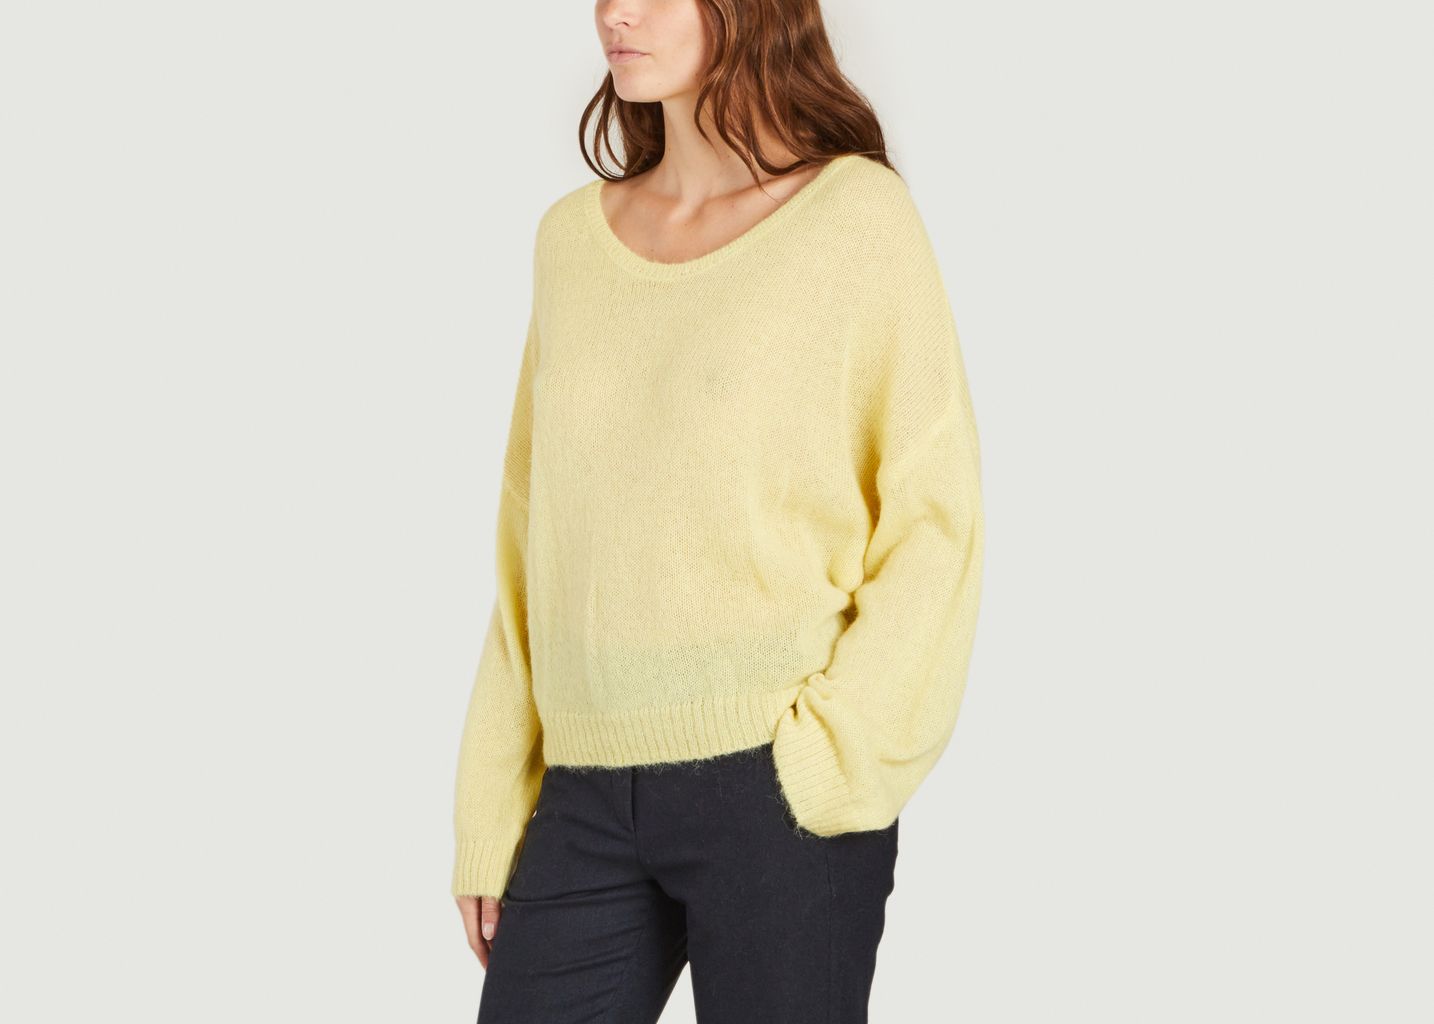 Chloé round neck knit sweater - Karma Koma 